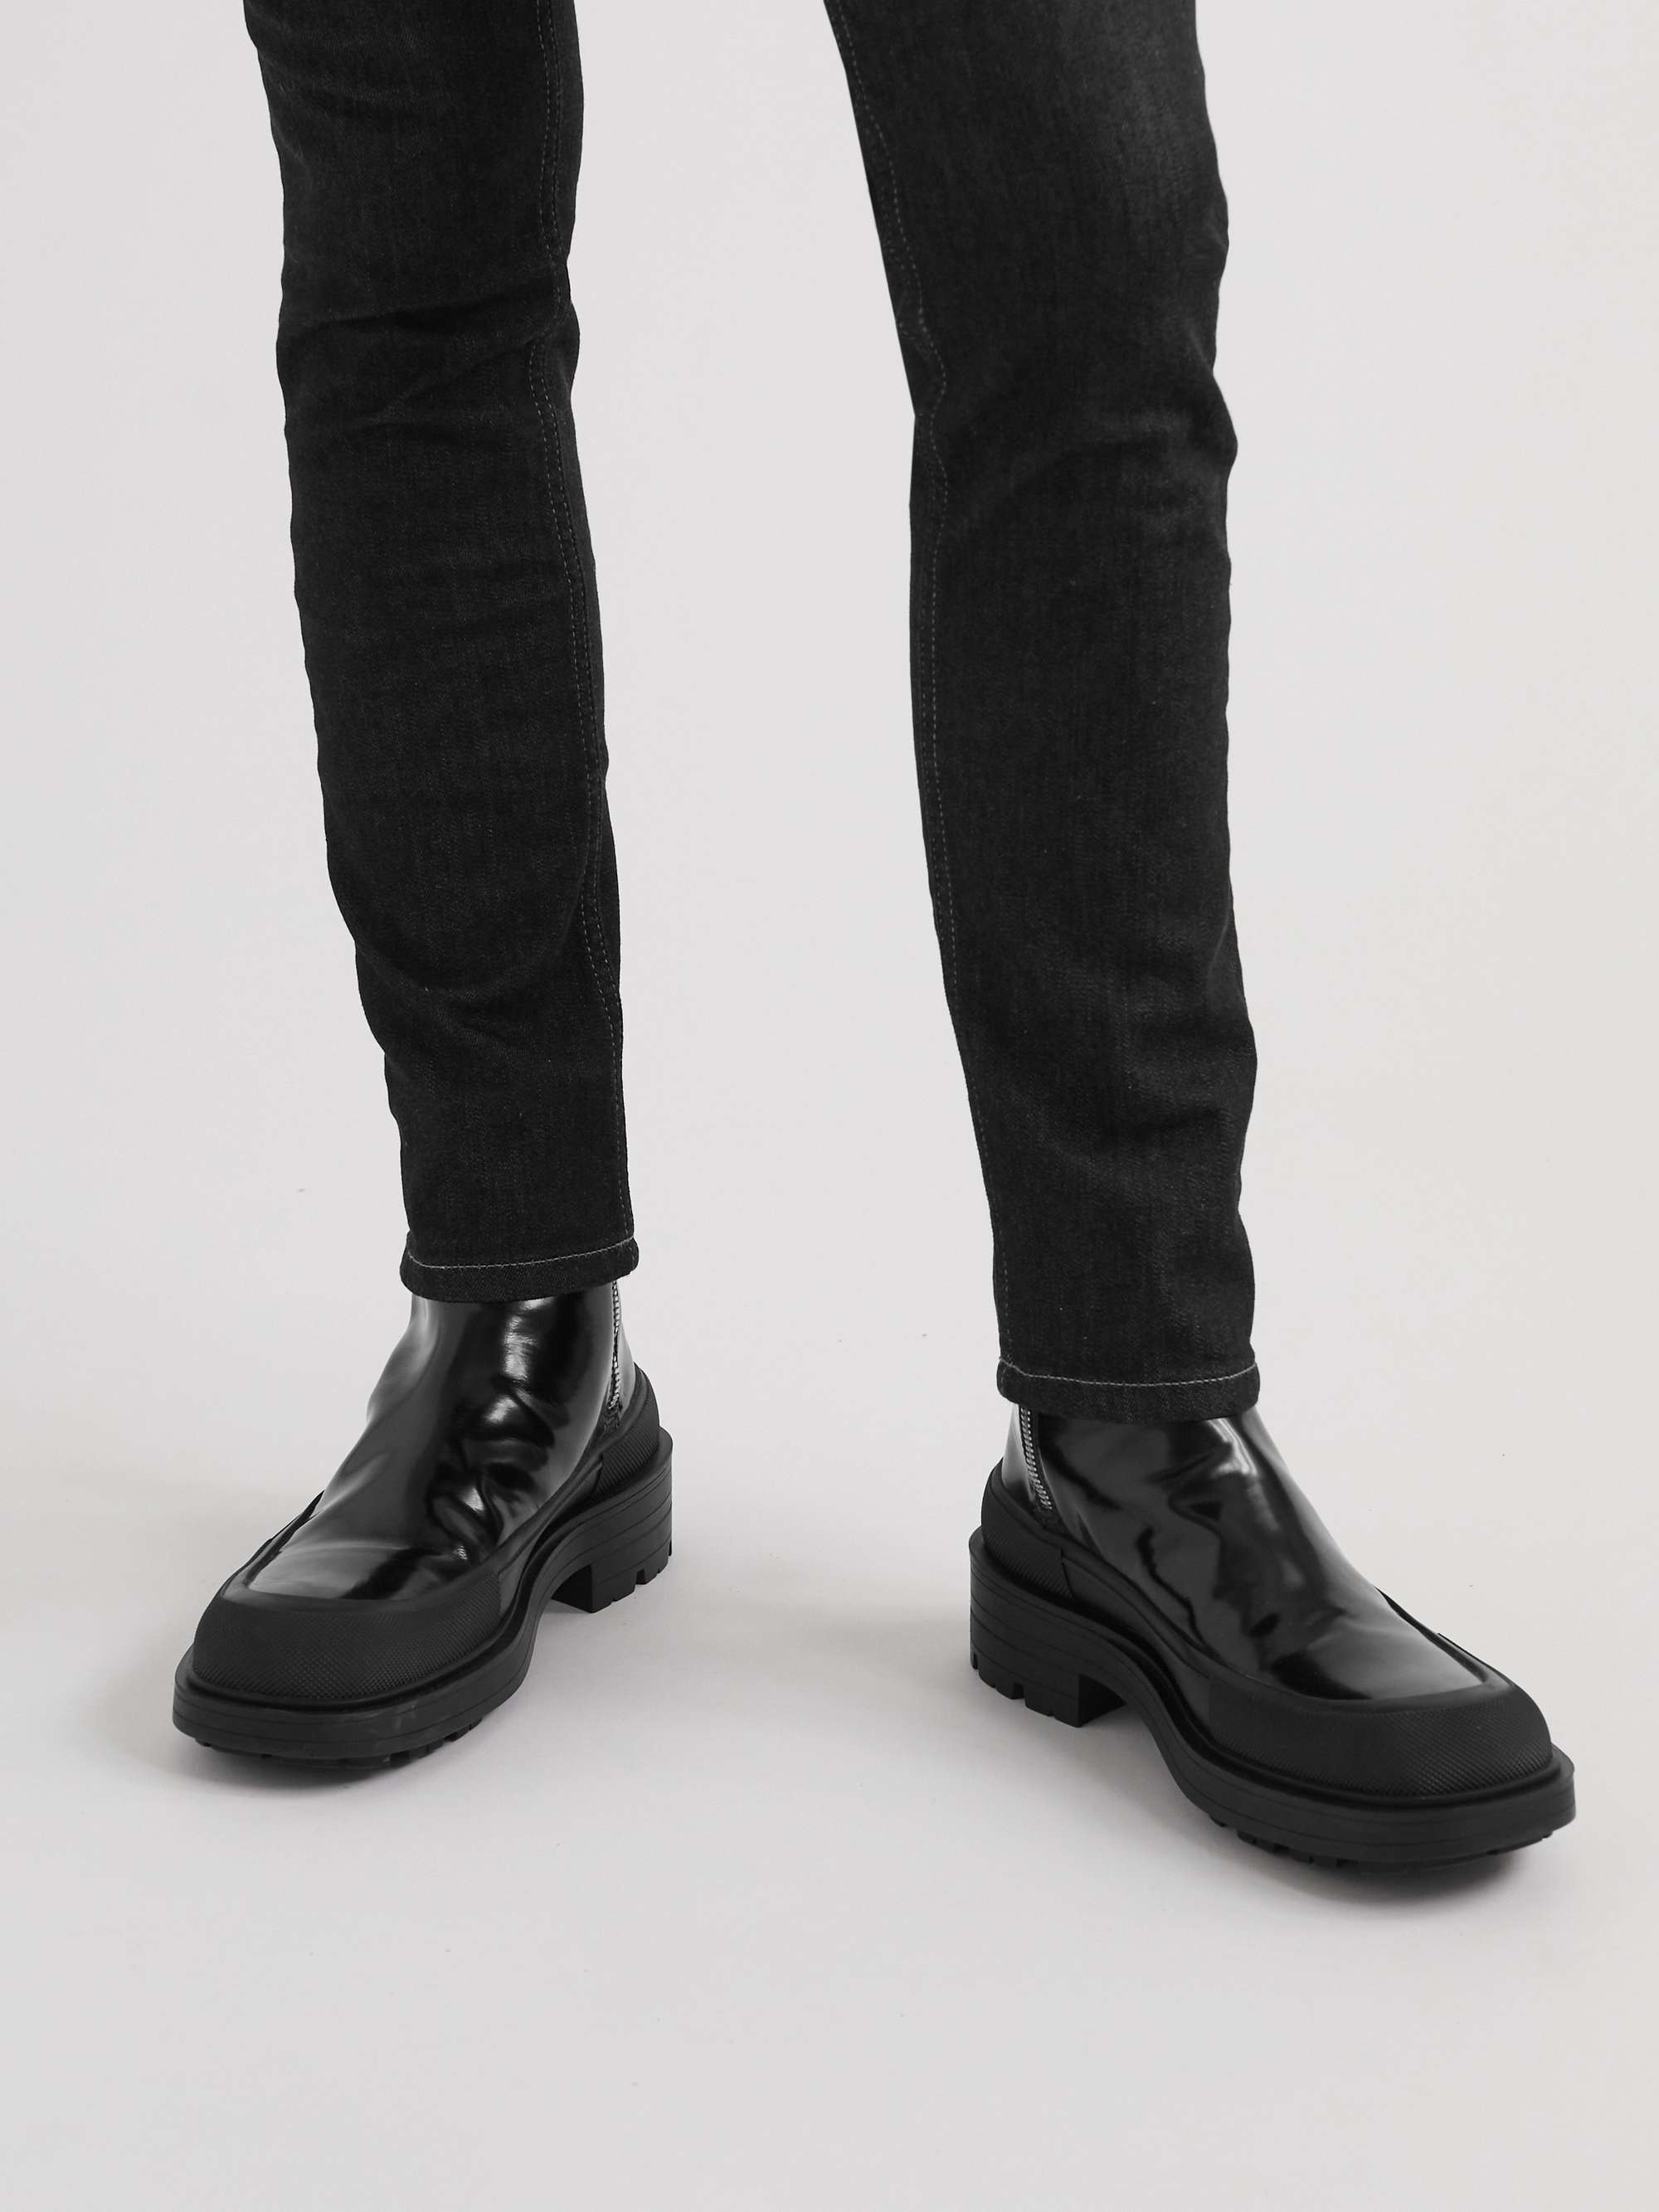 ALEXANDER MCQUEEN Rubber-Trimmed Leather Chelsea Boots for Men | MR PORTER